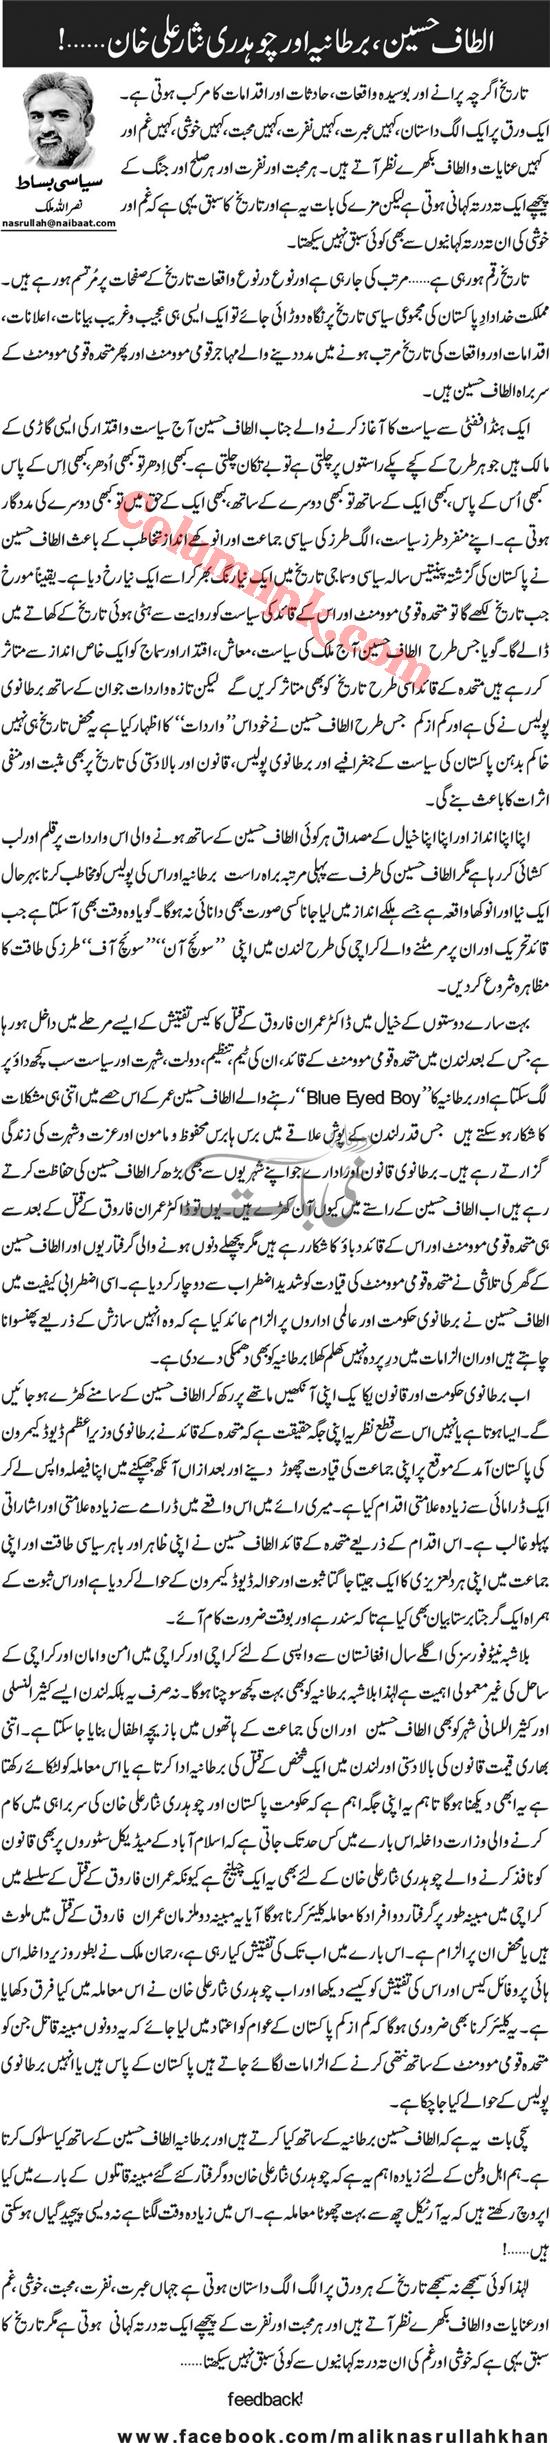 Altaf Husain In trouble in UK - urdu news - urdu coloumns